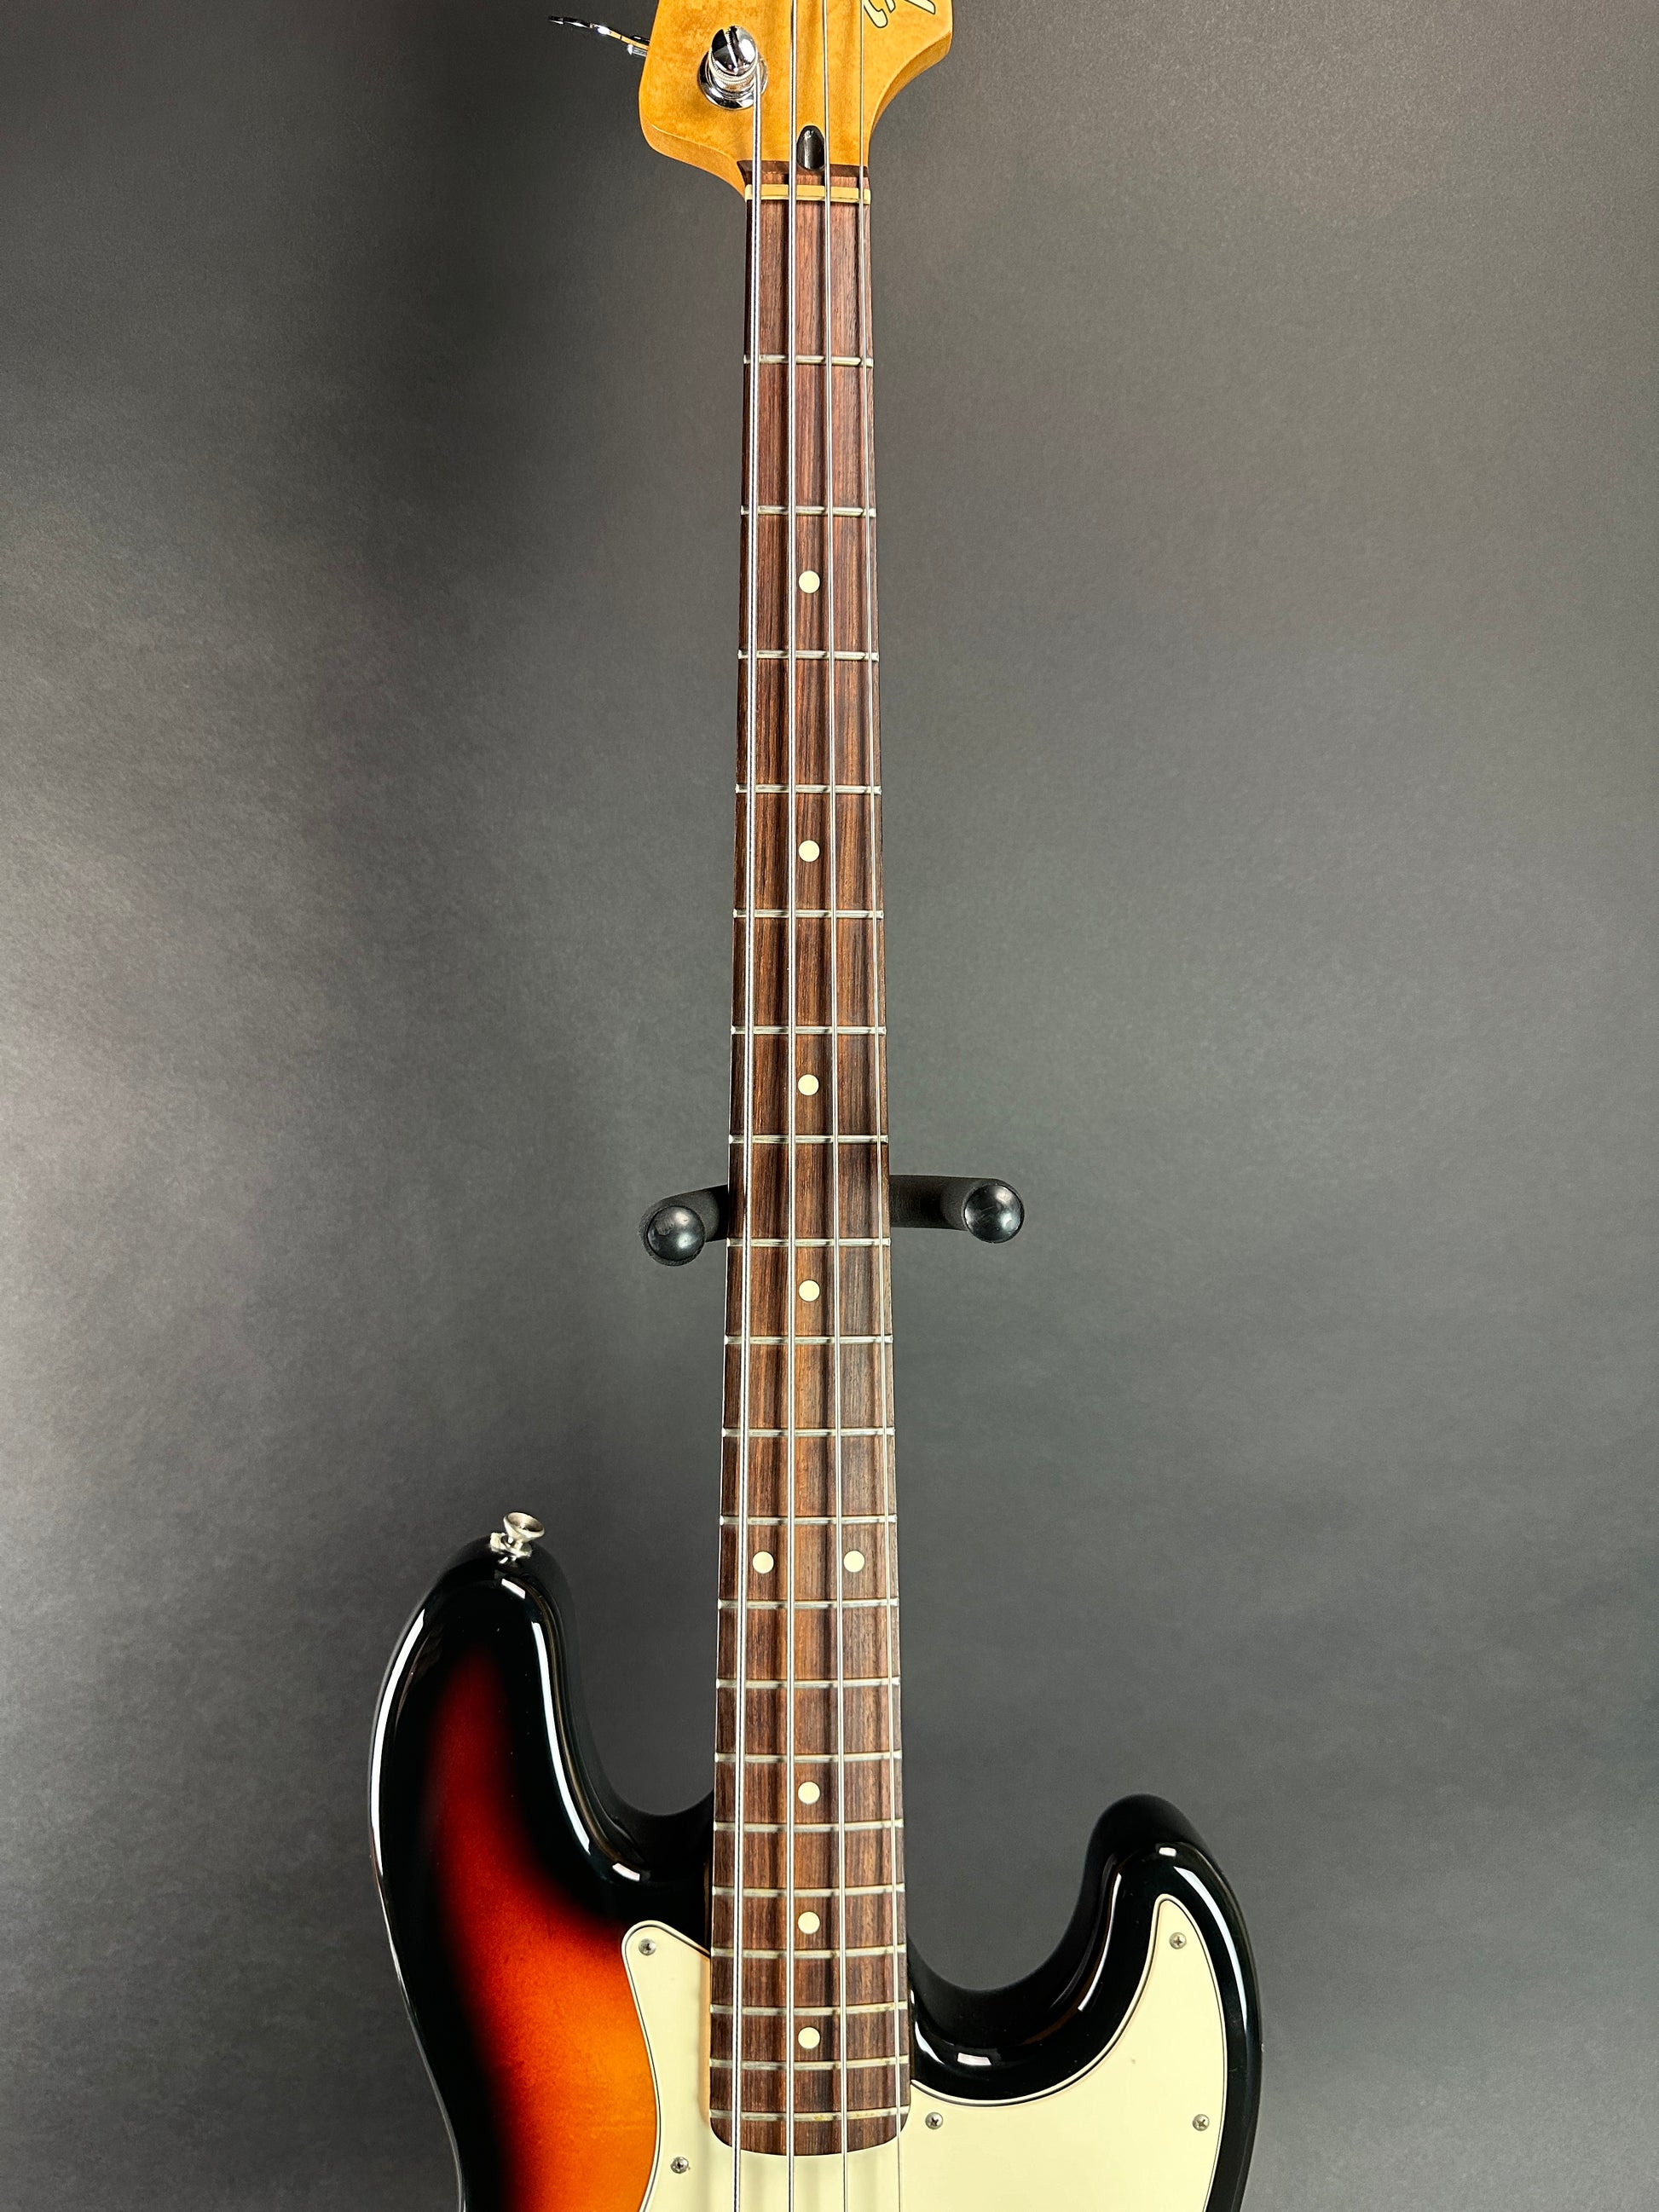 Fretboard of Used Fender Jazz Bass MIM Sunburst.